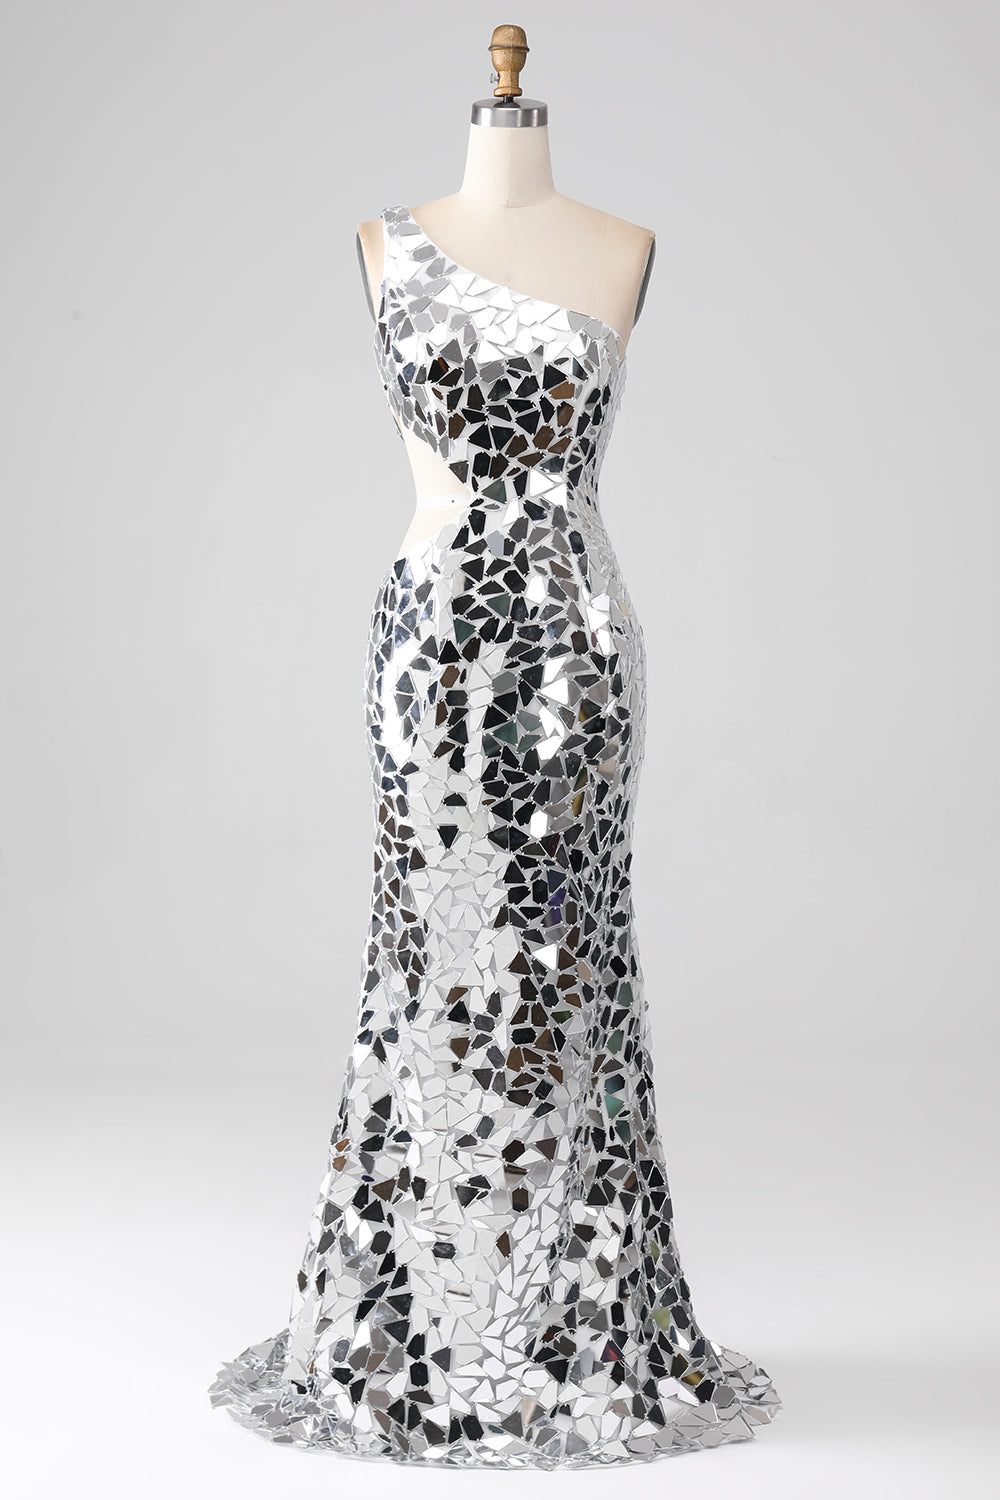 Silver Mirror paljetter En Shoulder Prom kjole med Hollow-out